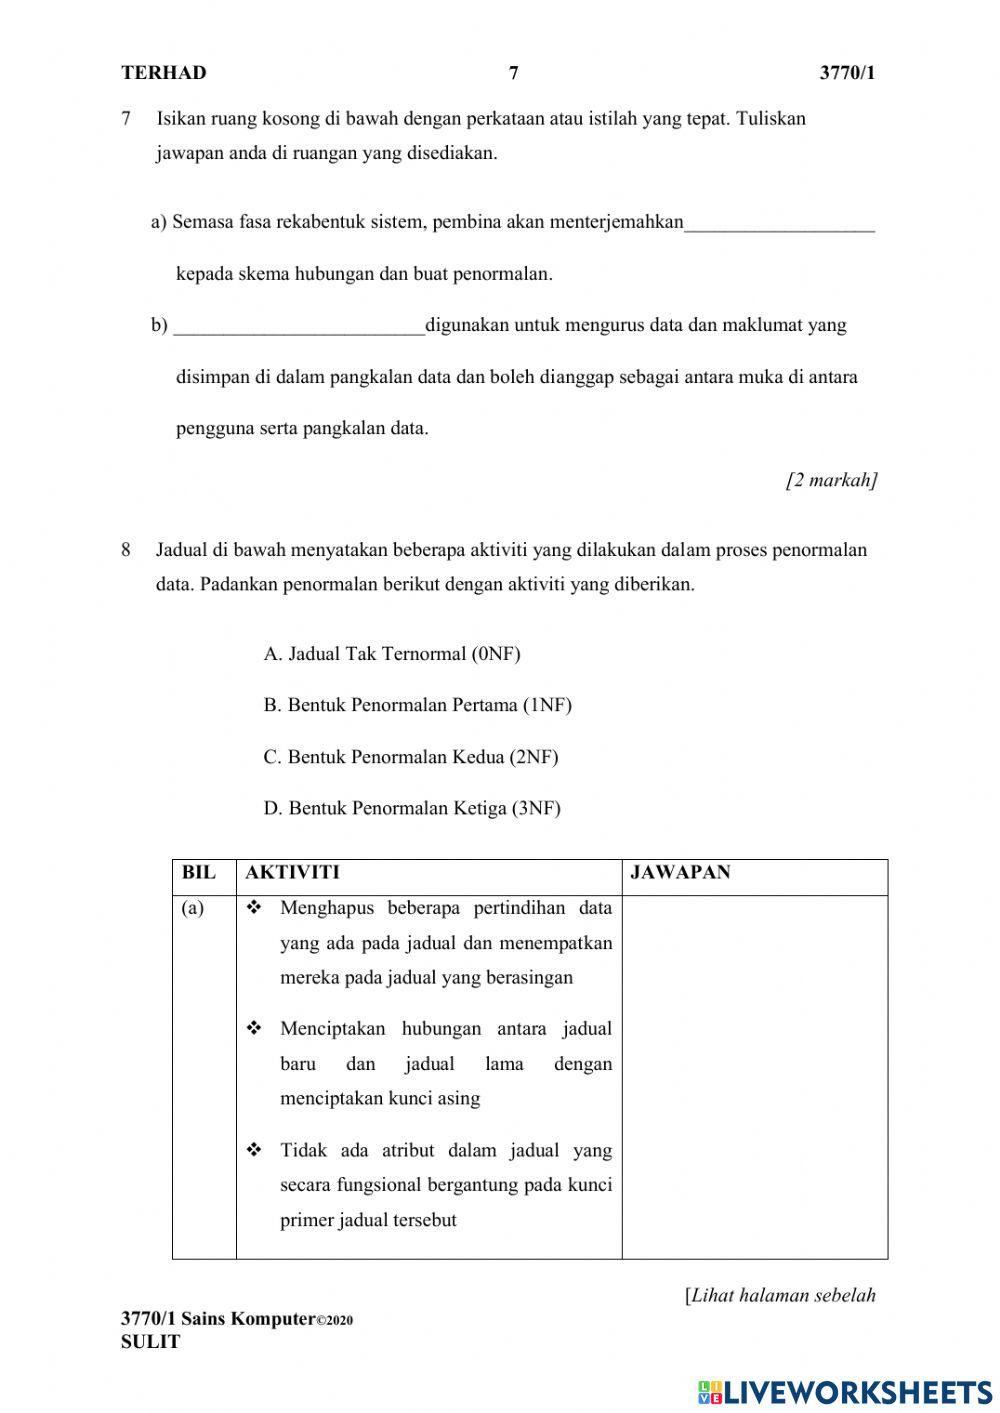 Ujian Diagnostik Sains Komputer Melaka 2020 (Soalan 1-10)